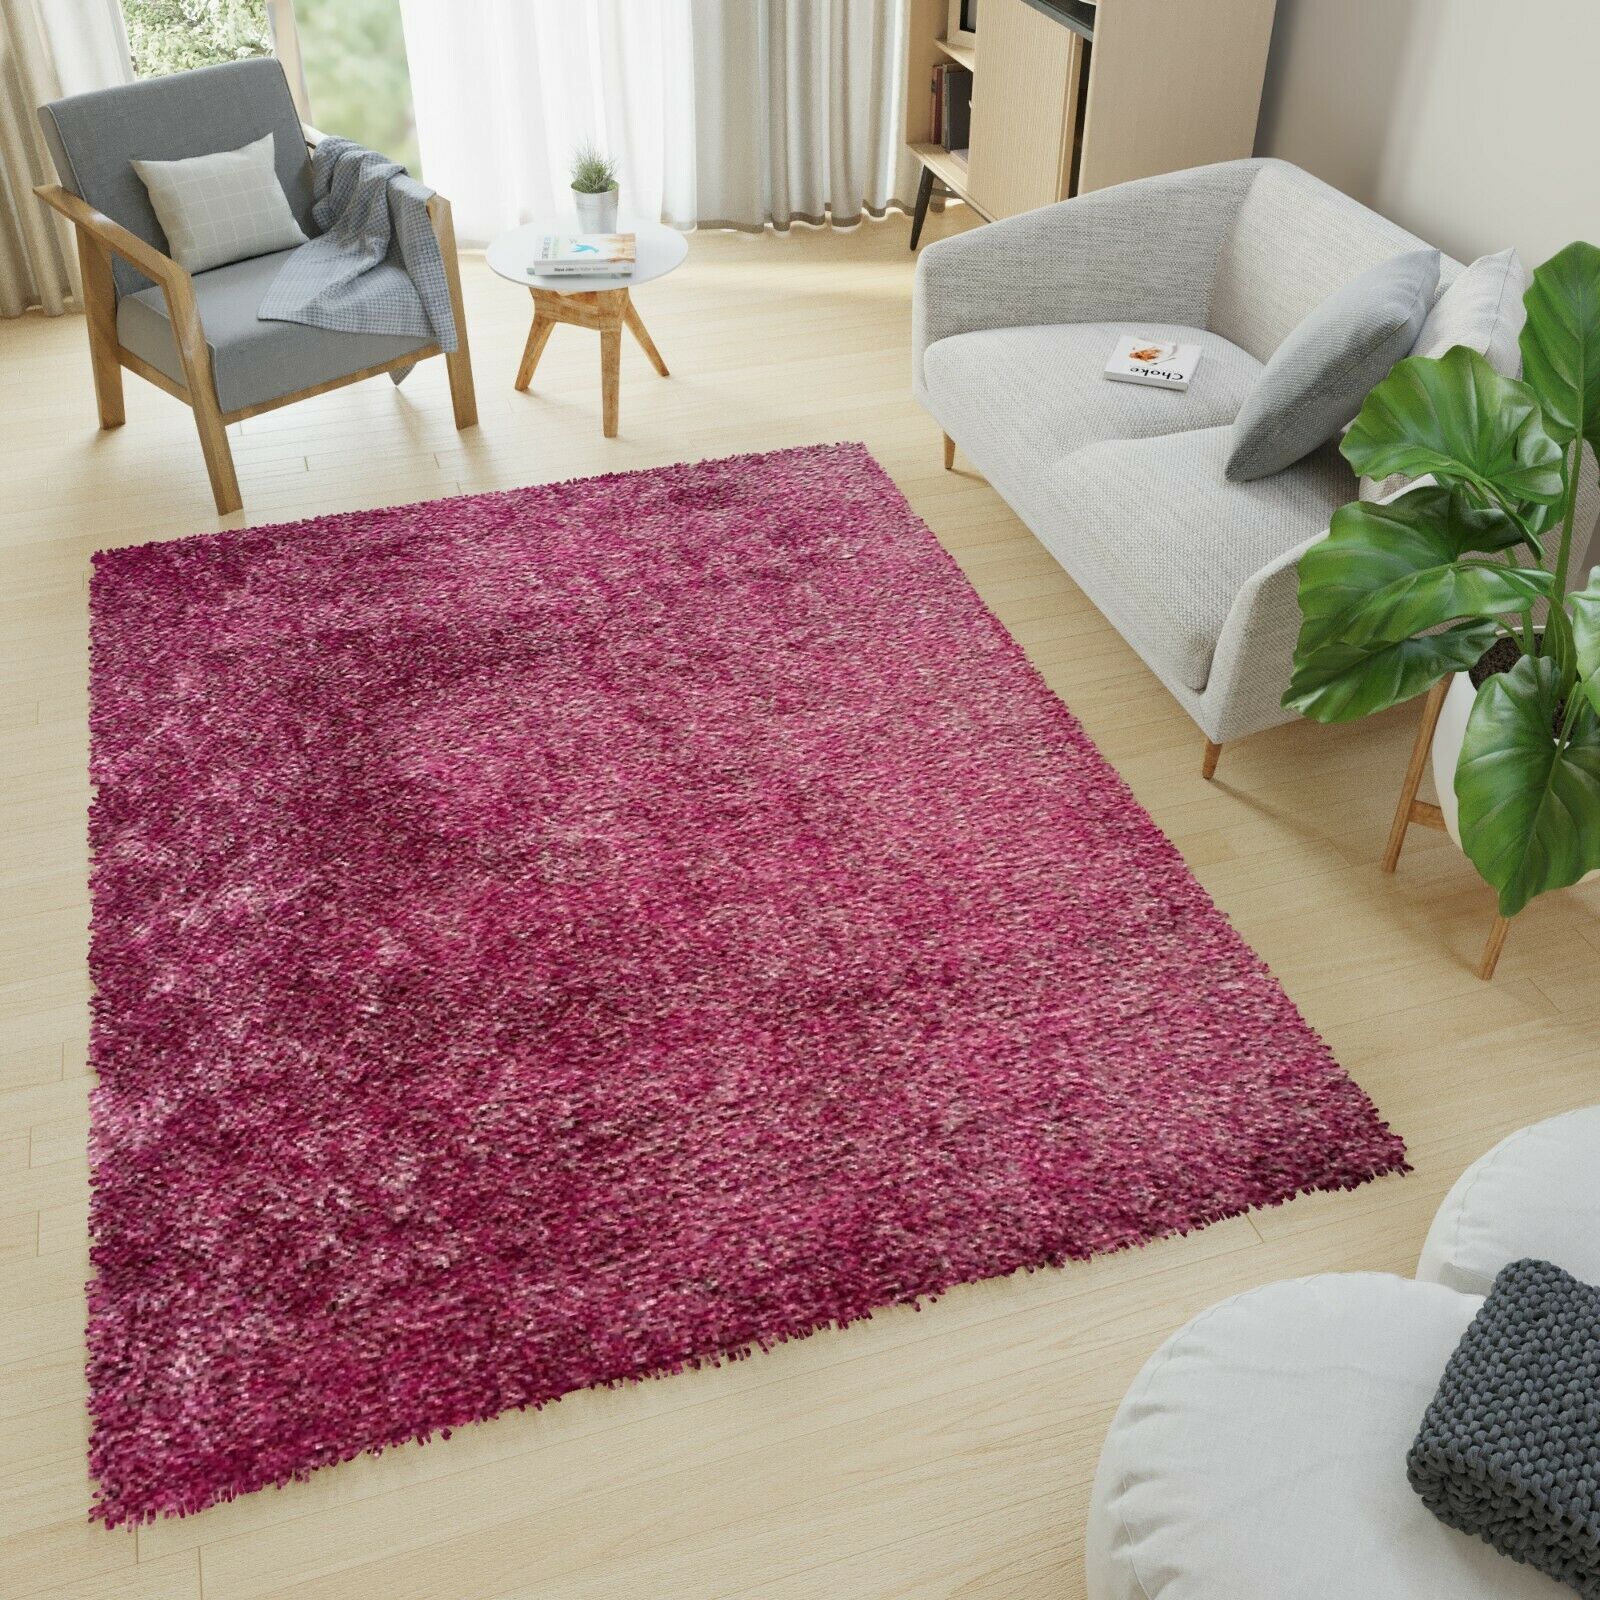 New Super Soft Modern Glossy High Pile Plain Shaggy Room Floor Rug Carpet Pink